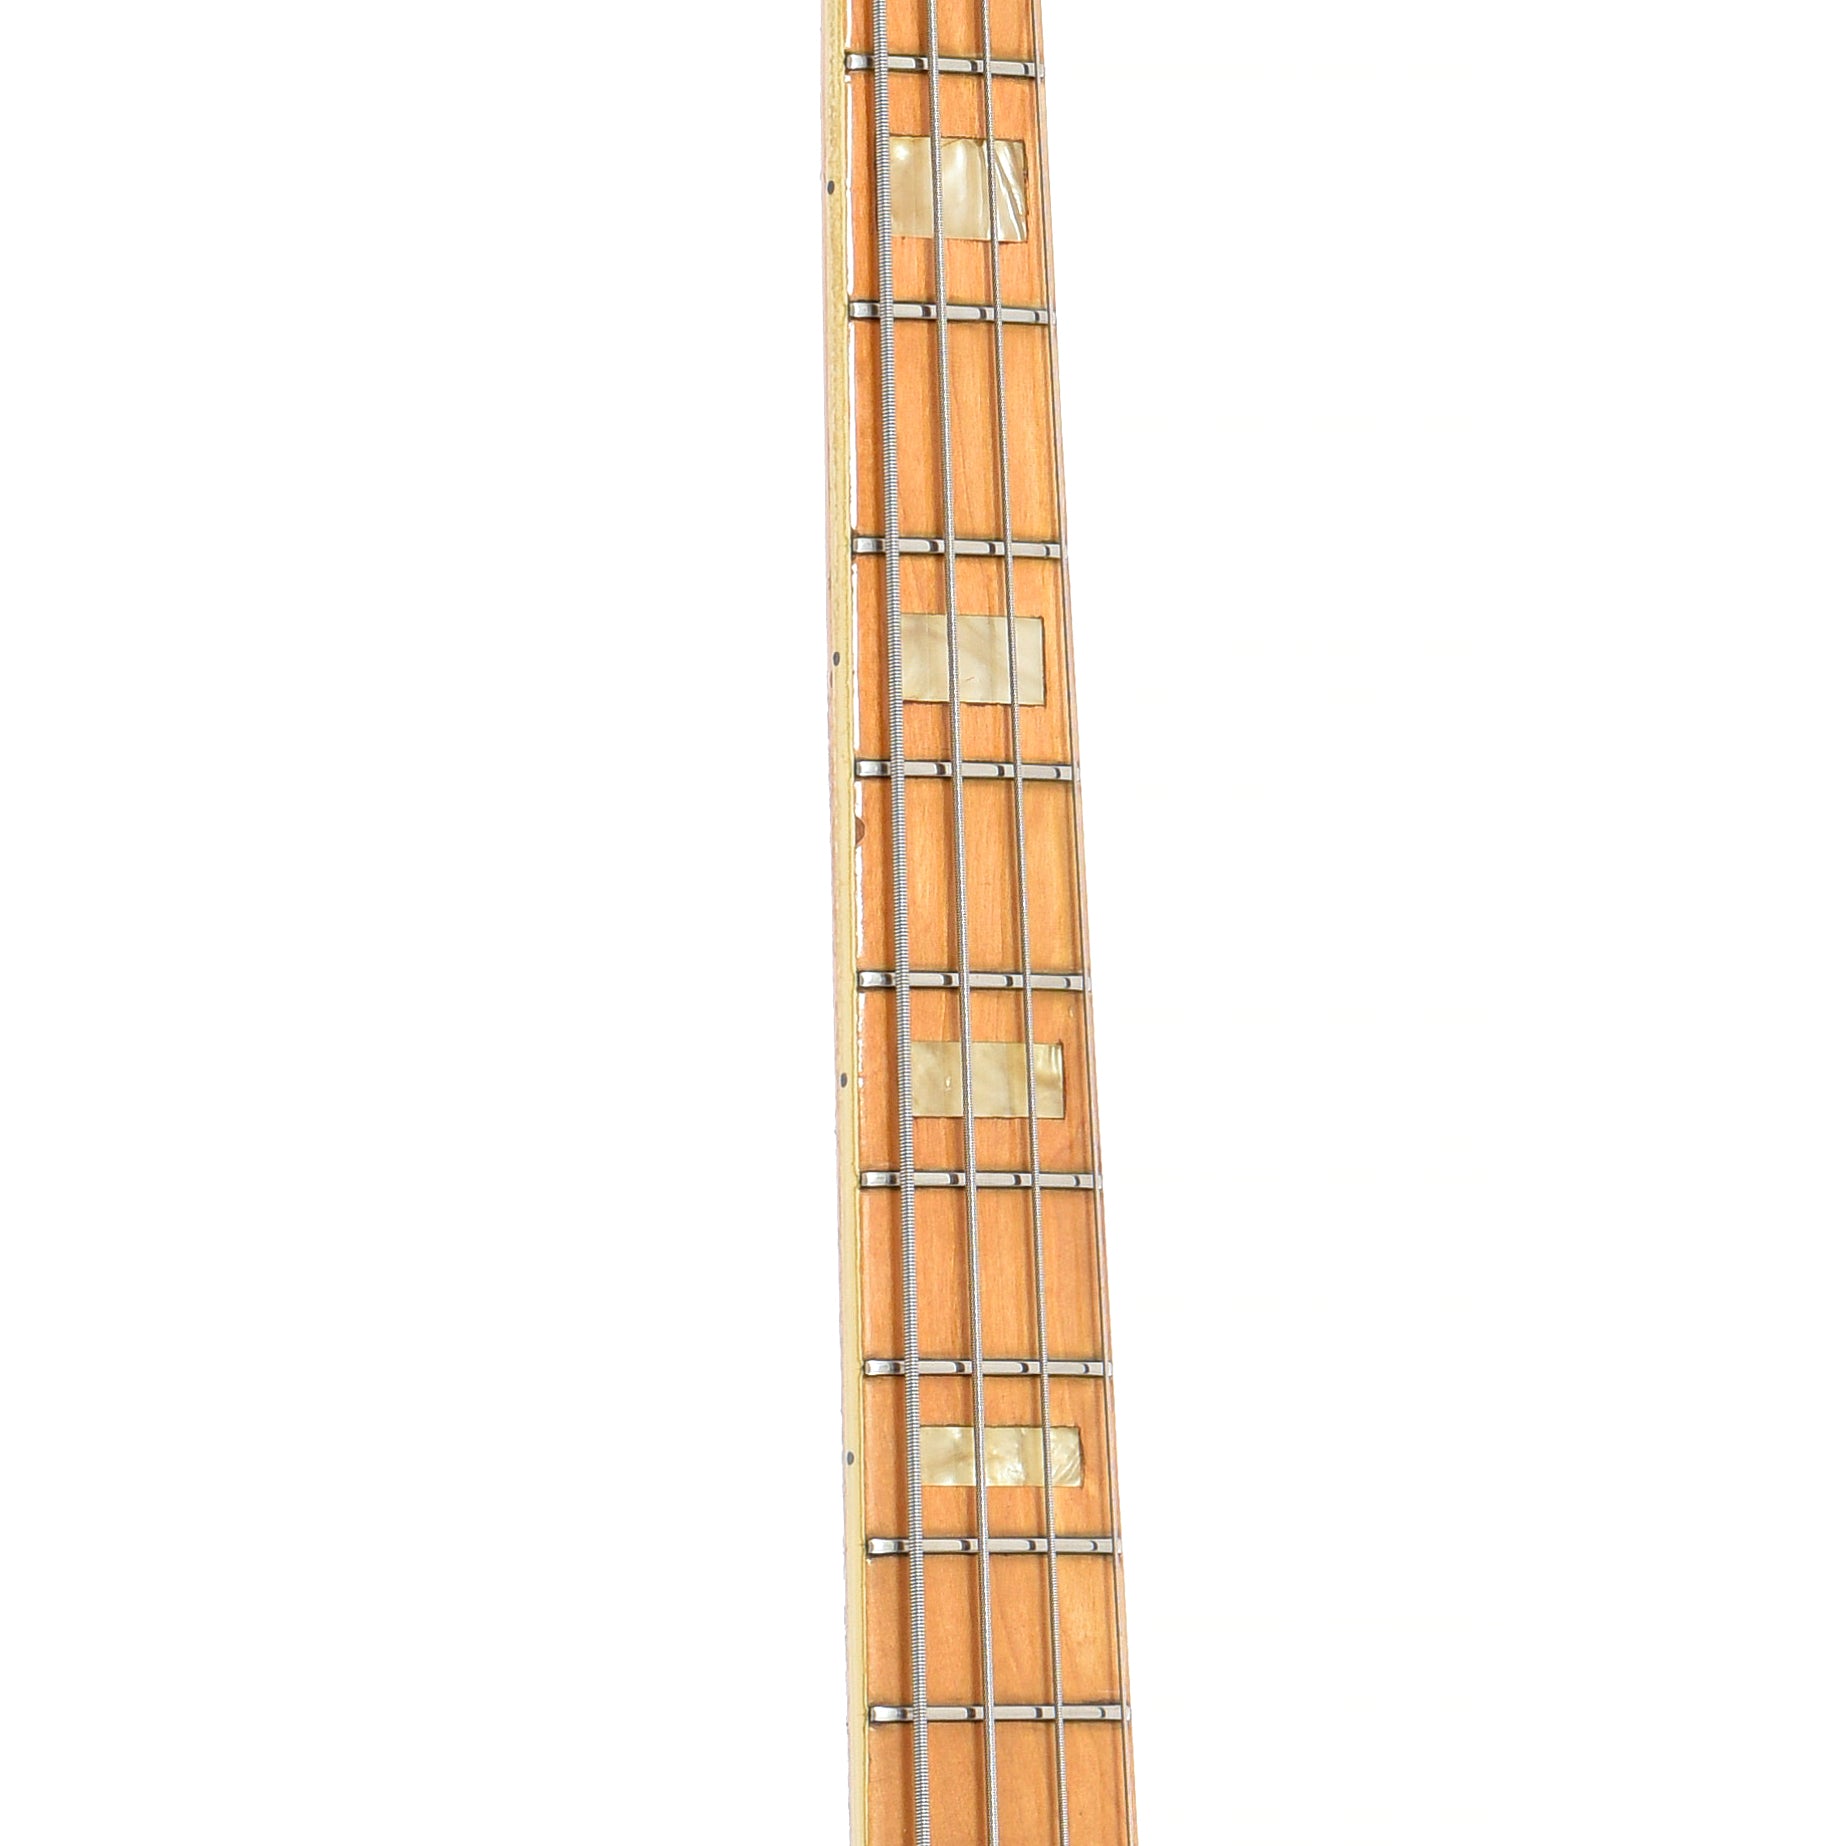 Fretboard of Fender Jazz Bass